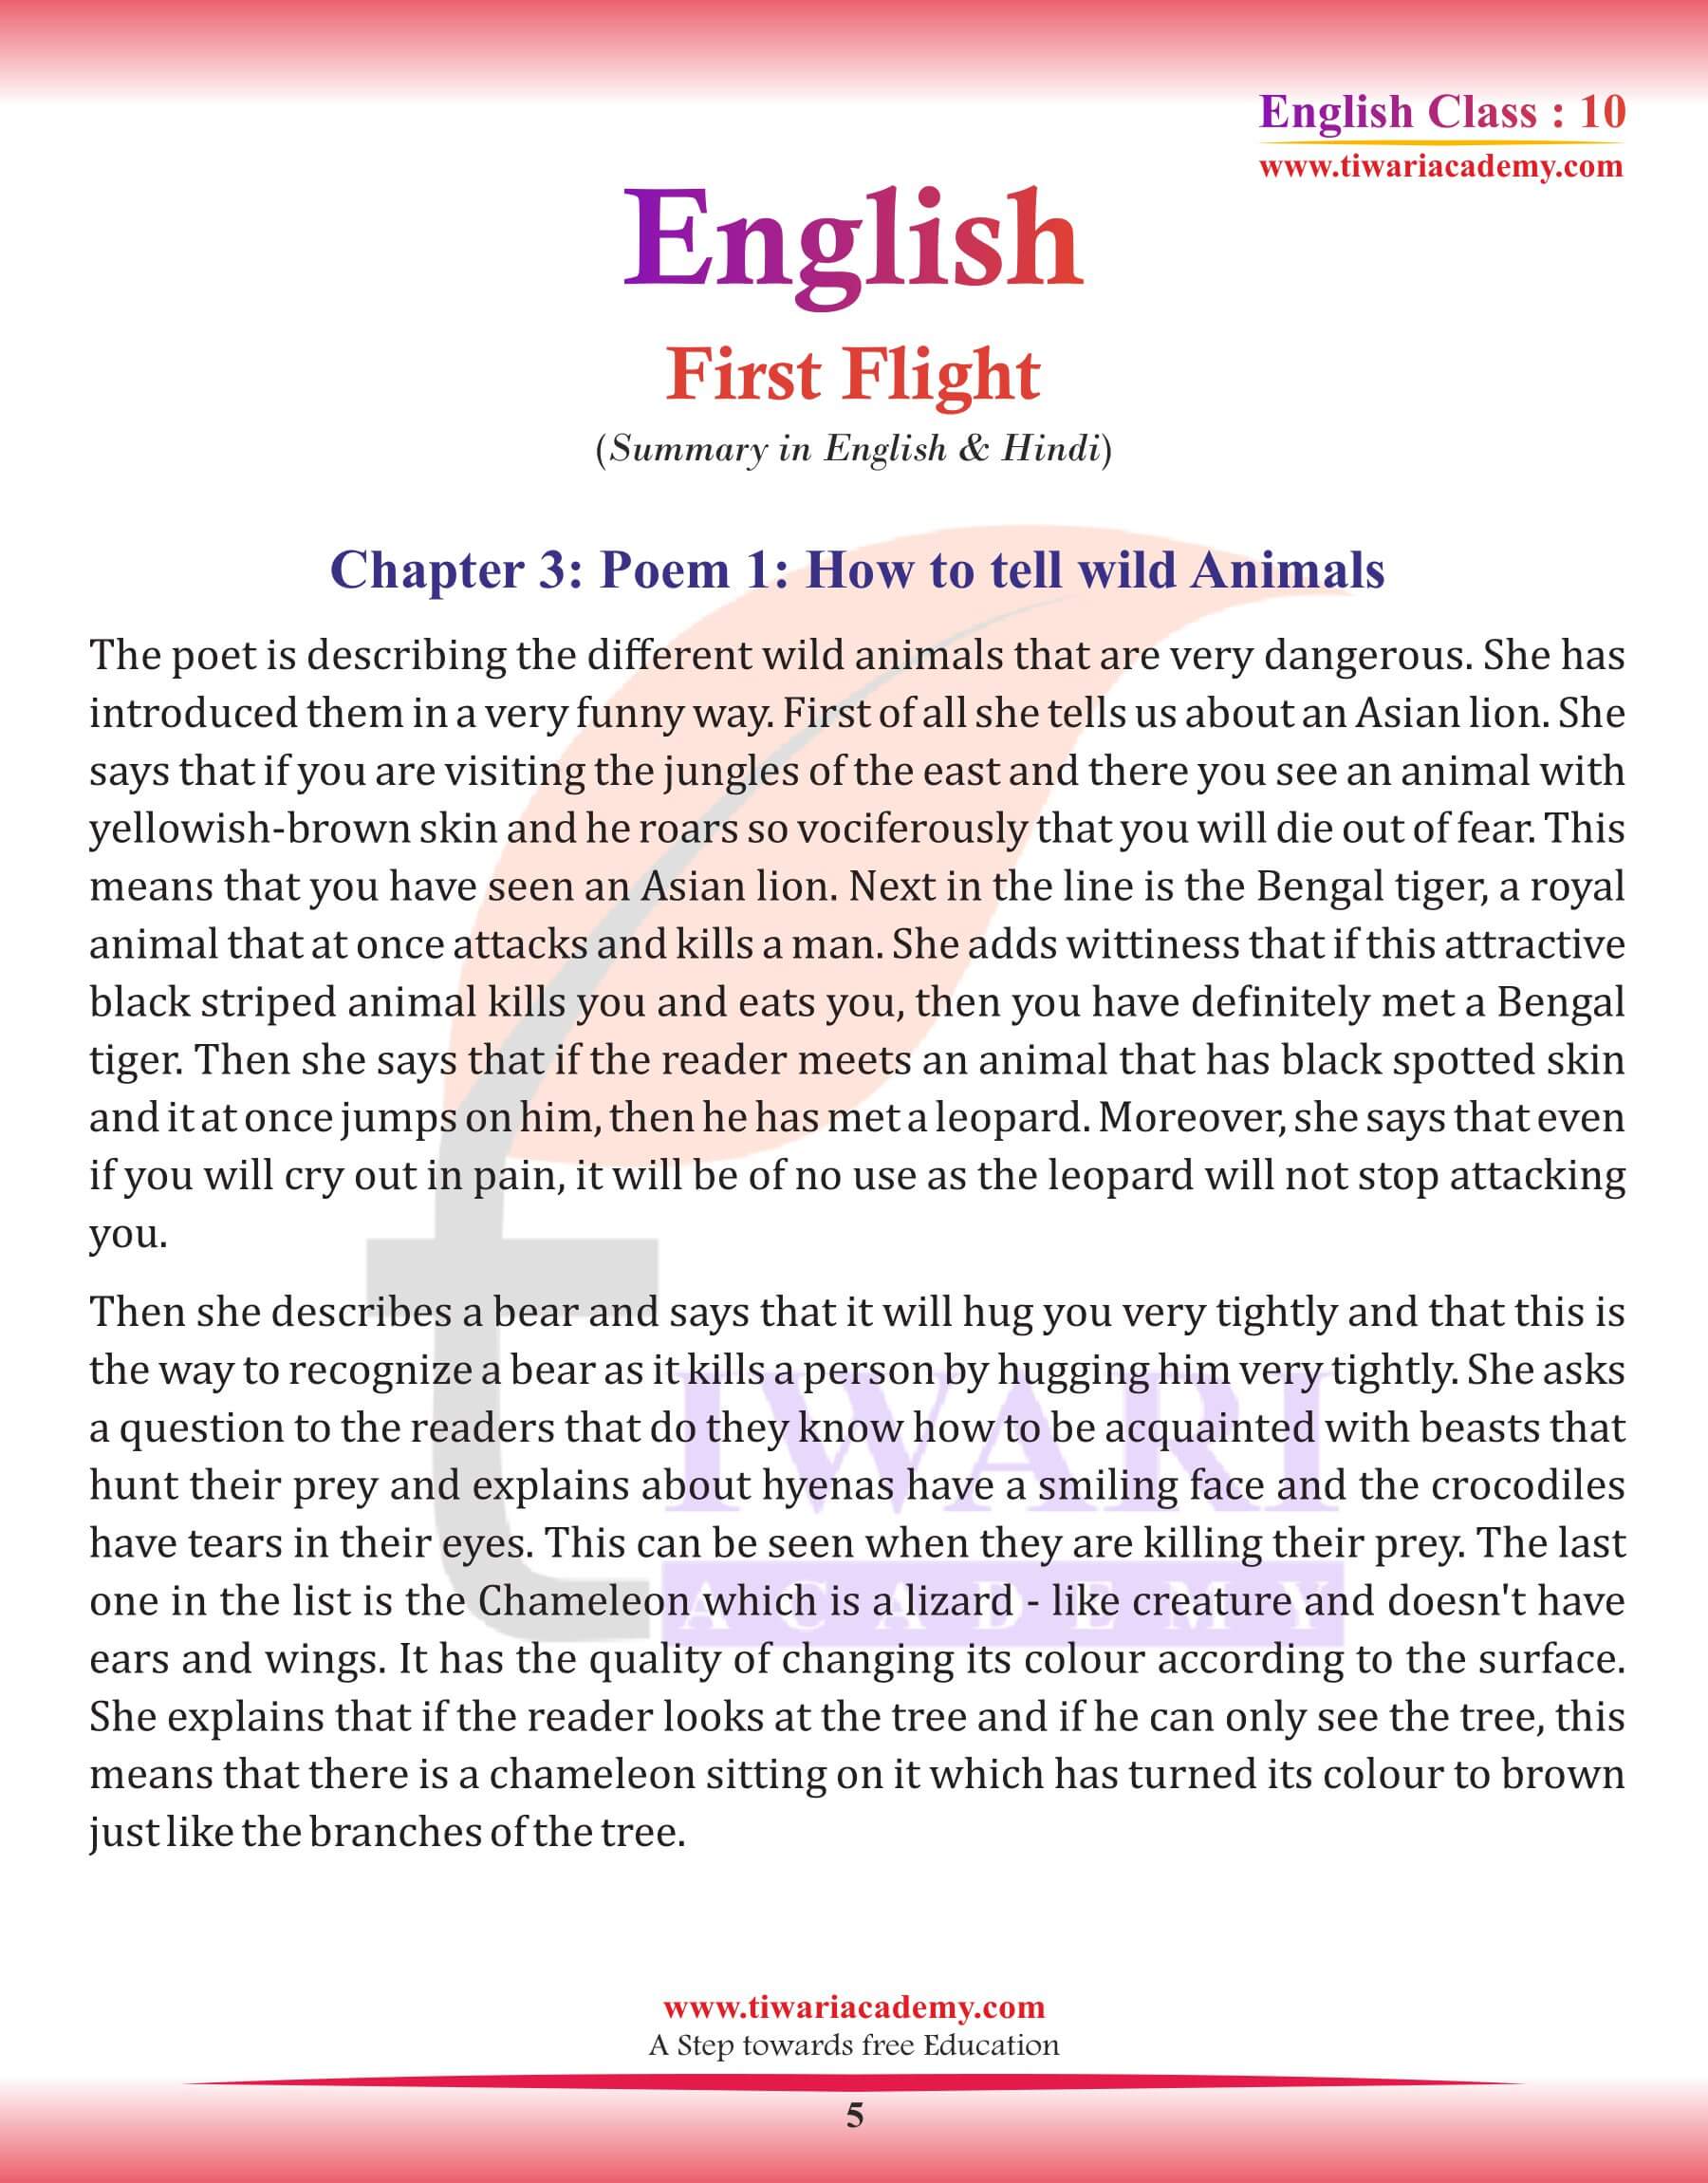 Class 10 English Chapter 3 Summary in English Medium